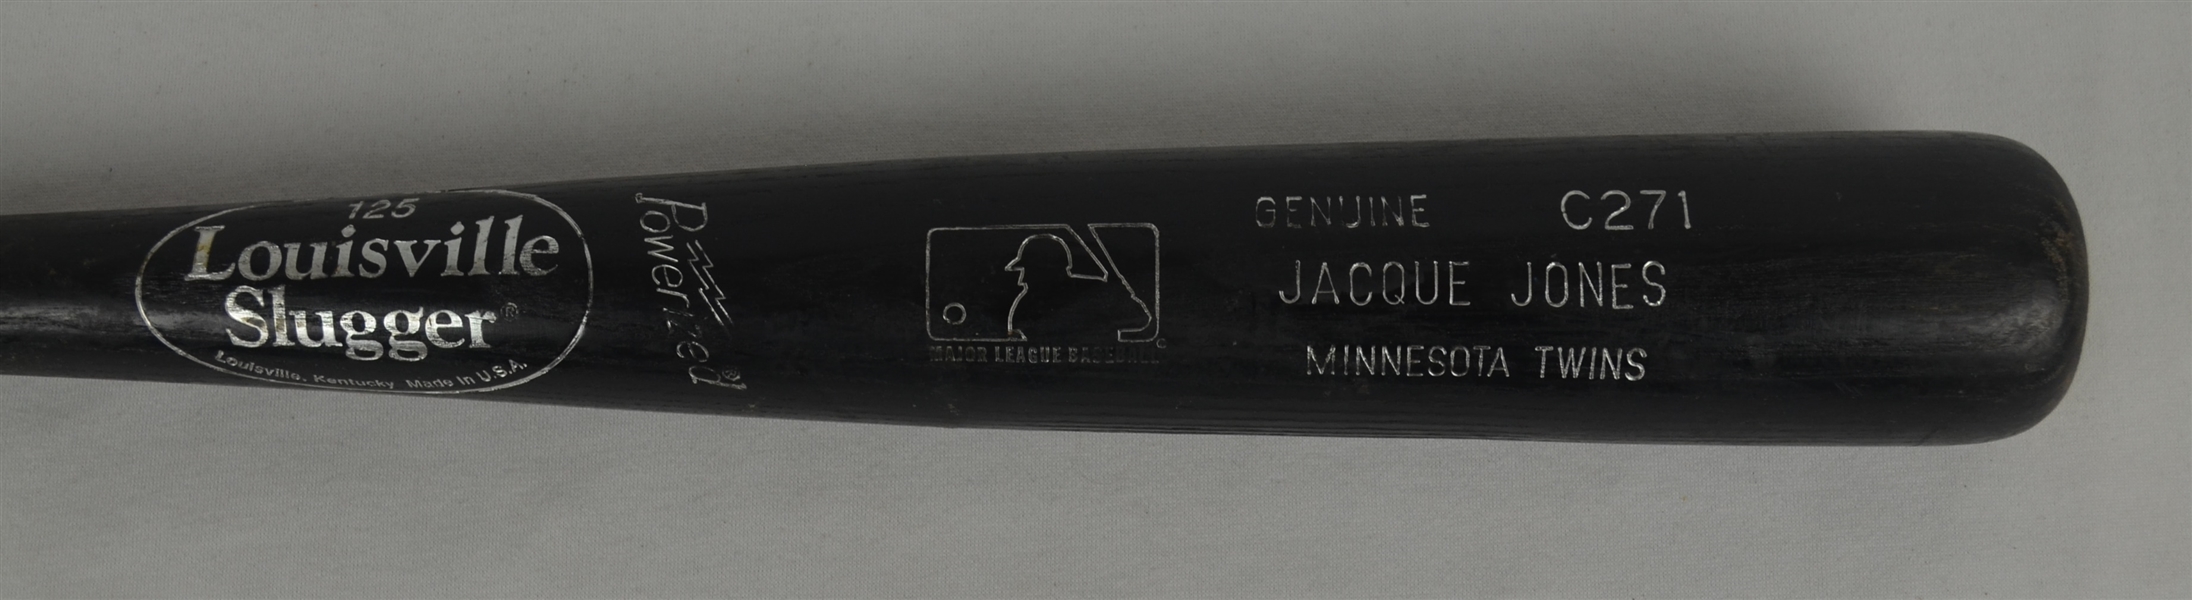 Jacque Jones Minnesota Twins Profeesional Model Bat w/Heavy Use